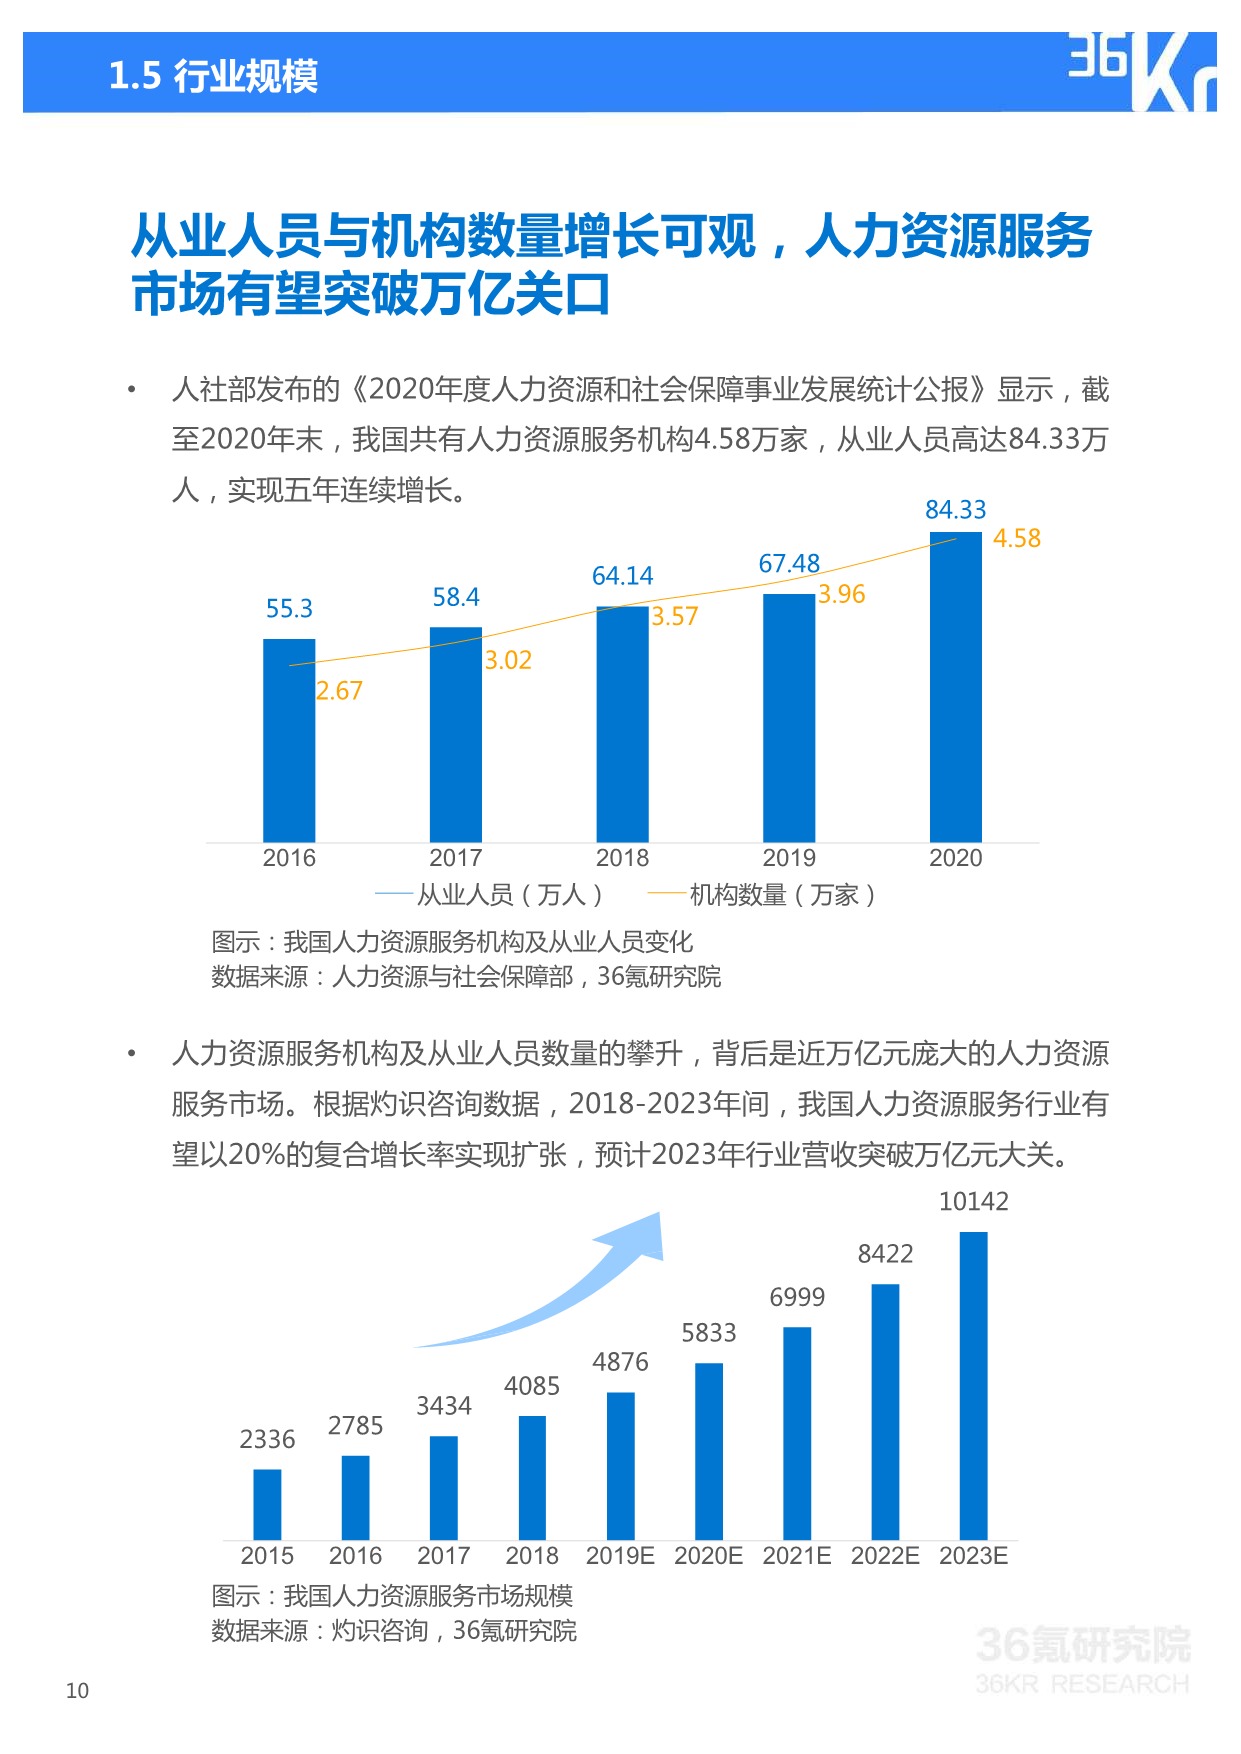 36Kr-2021年中国人力资源服务行业研究报告_10.jpeg